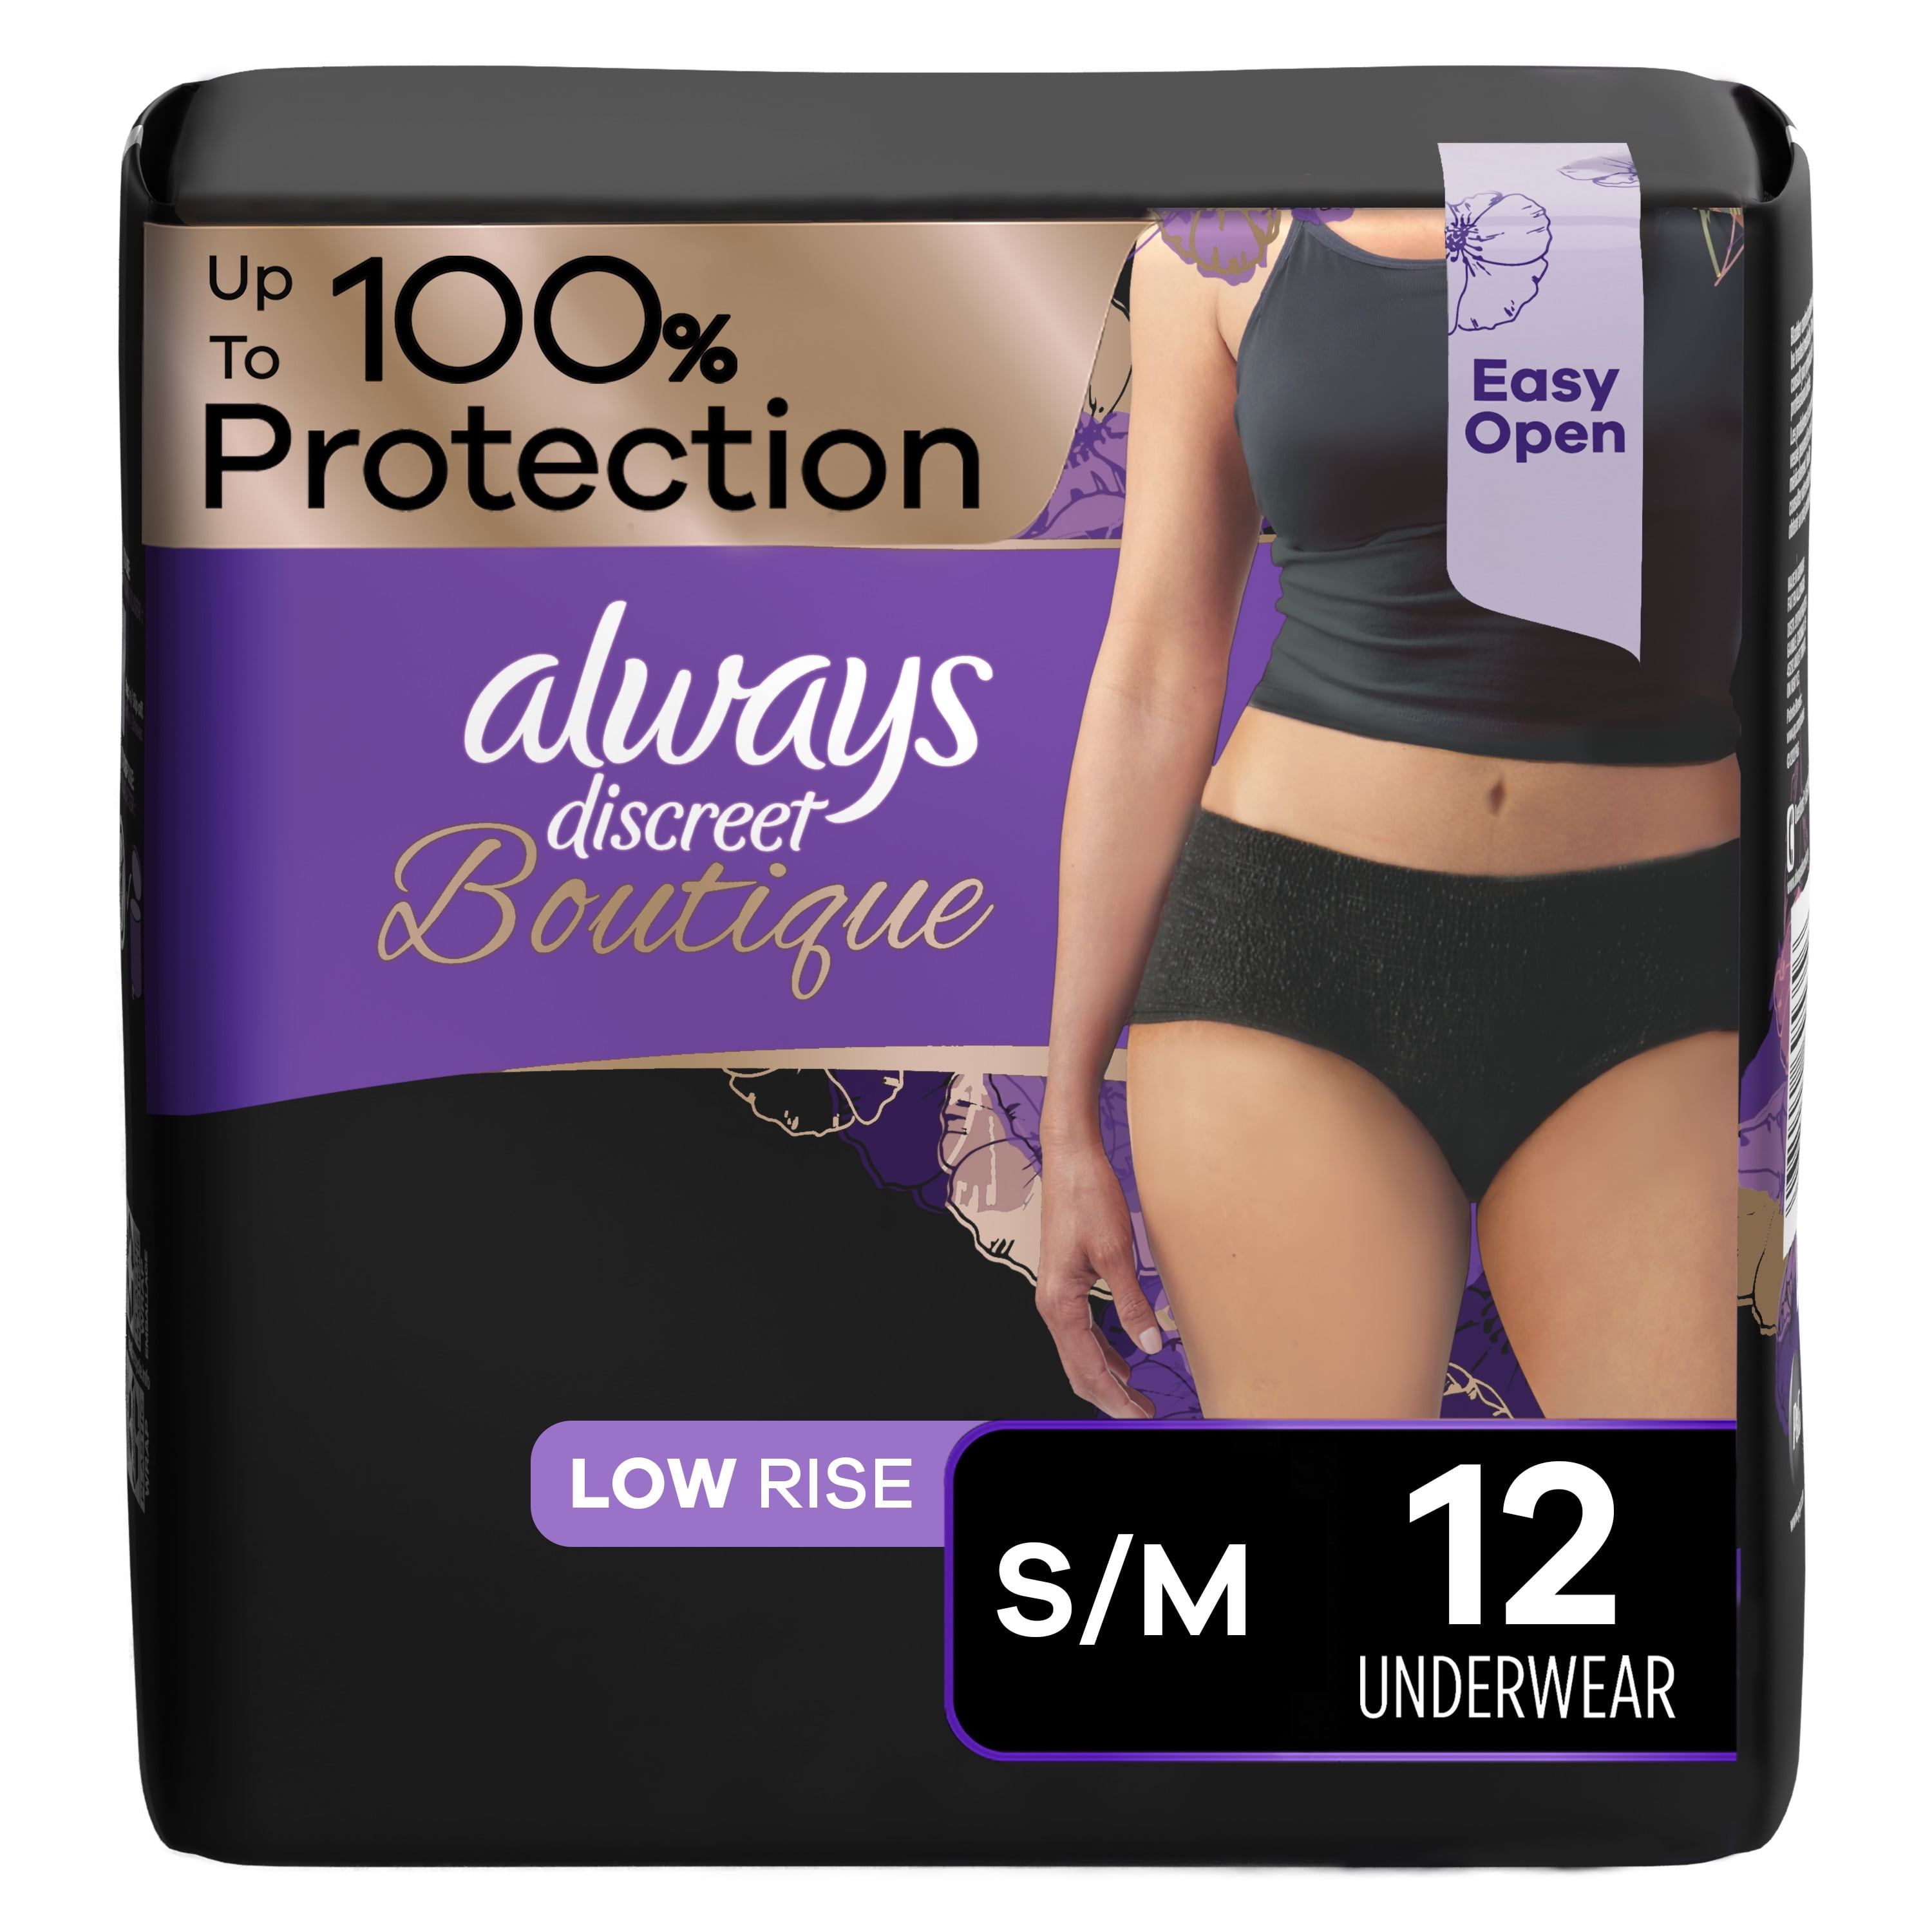  Presto Maximum Discreet Incontinence Underwear for Men -  Disposable, Odor Eliminator, Large/X-Large - 18/Bag, 72/Case : Health &  Household